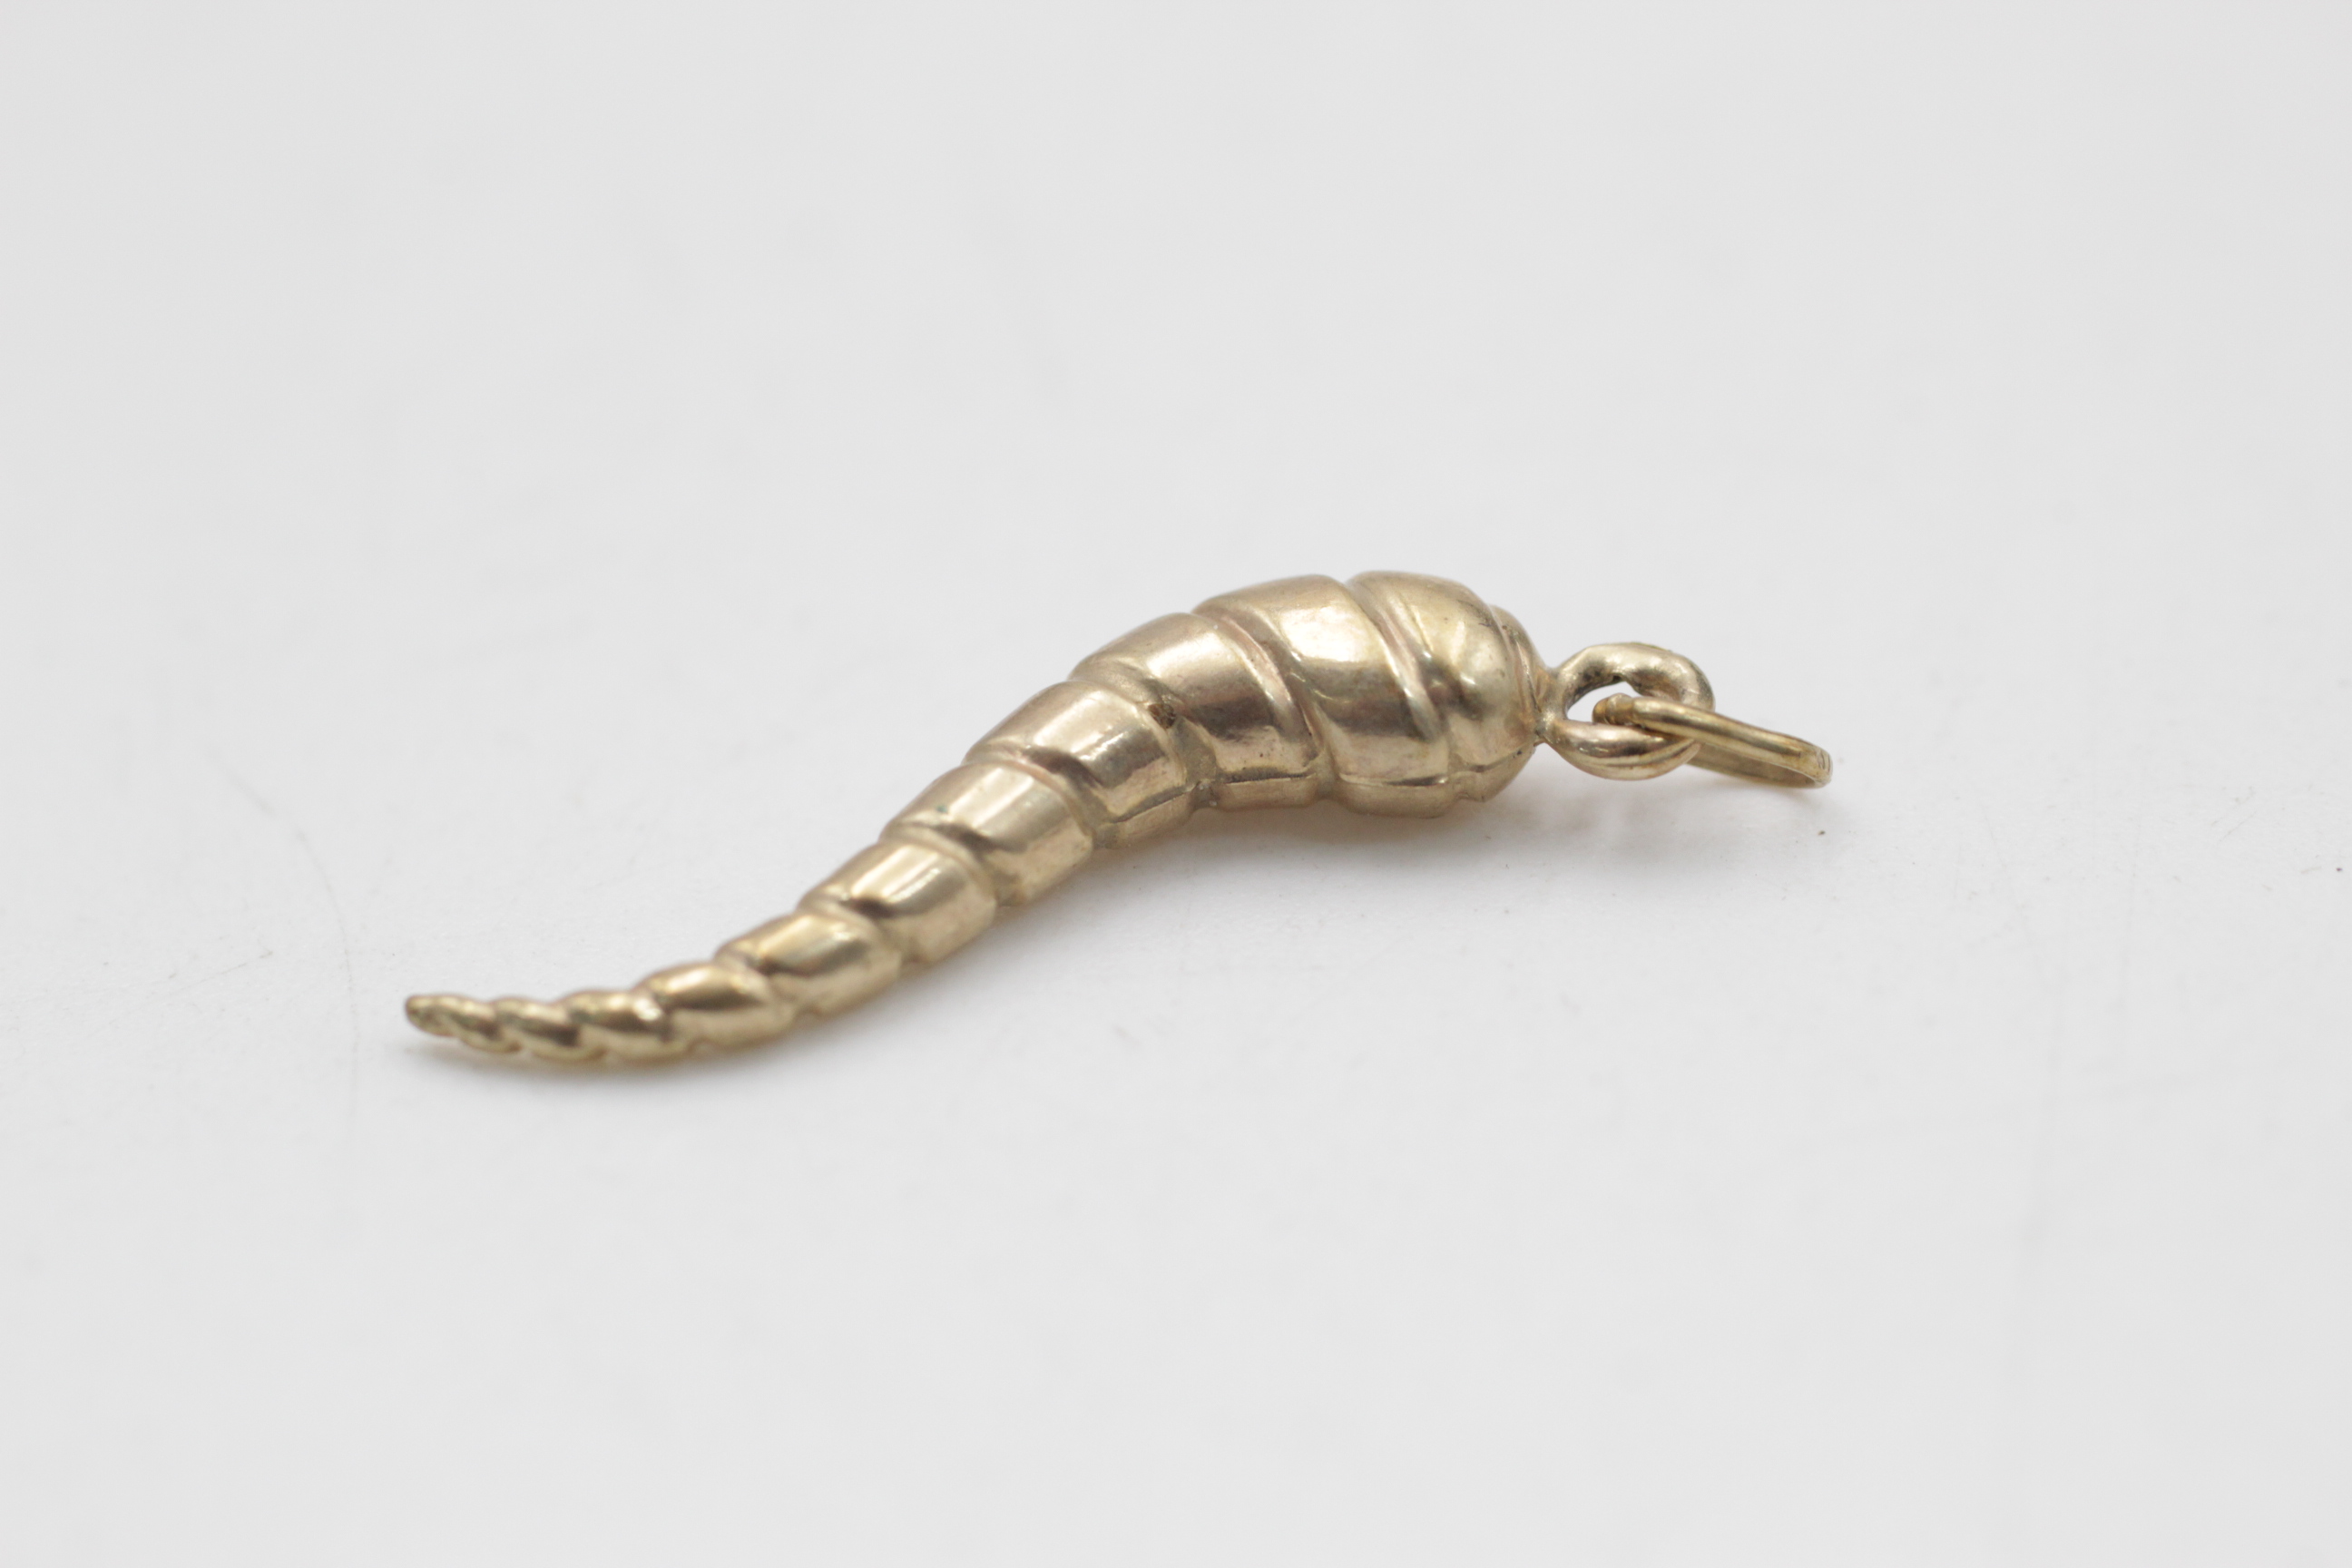 9ct gold horn of plenty charm pendant (0.5g) - Image 3 of 4